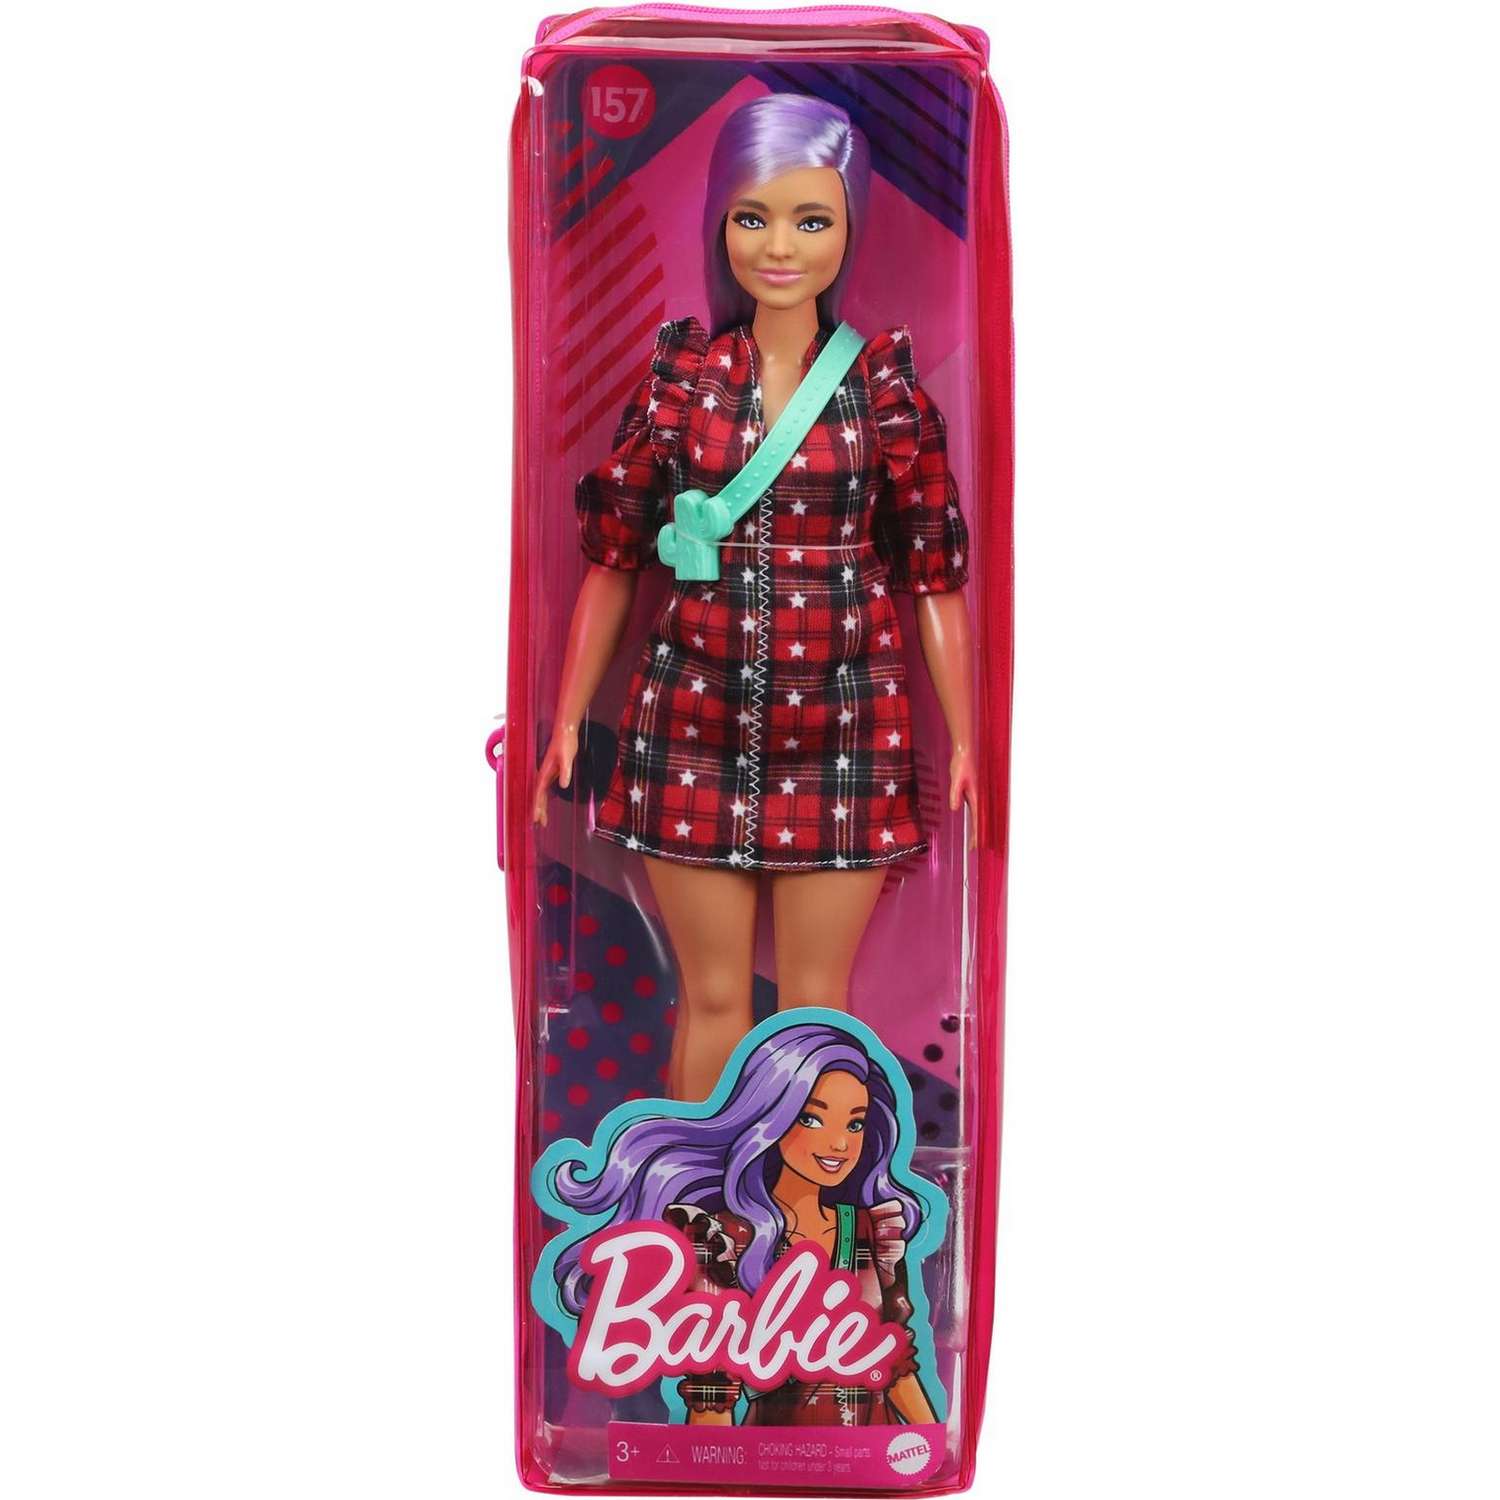 Кукла Barbie Игра с модой 157 GRB49 FBR37 - фото 2